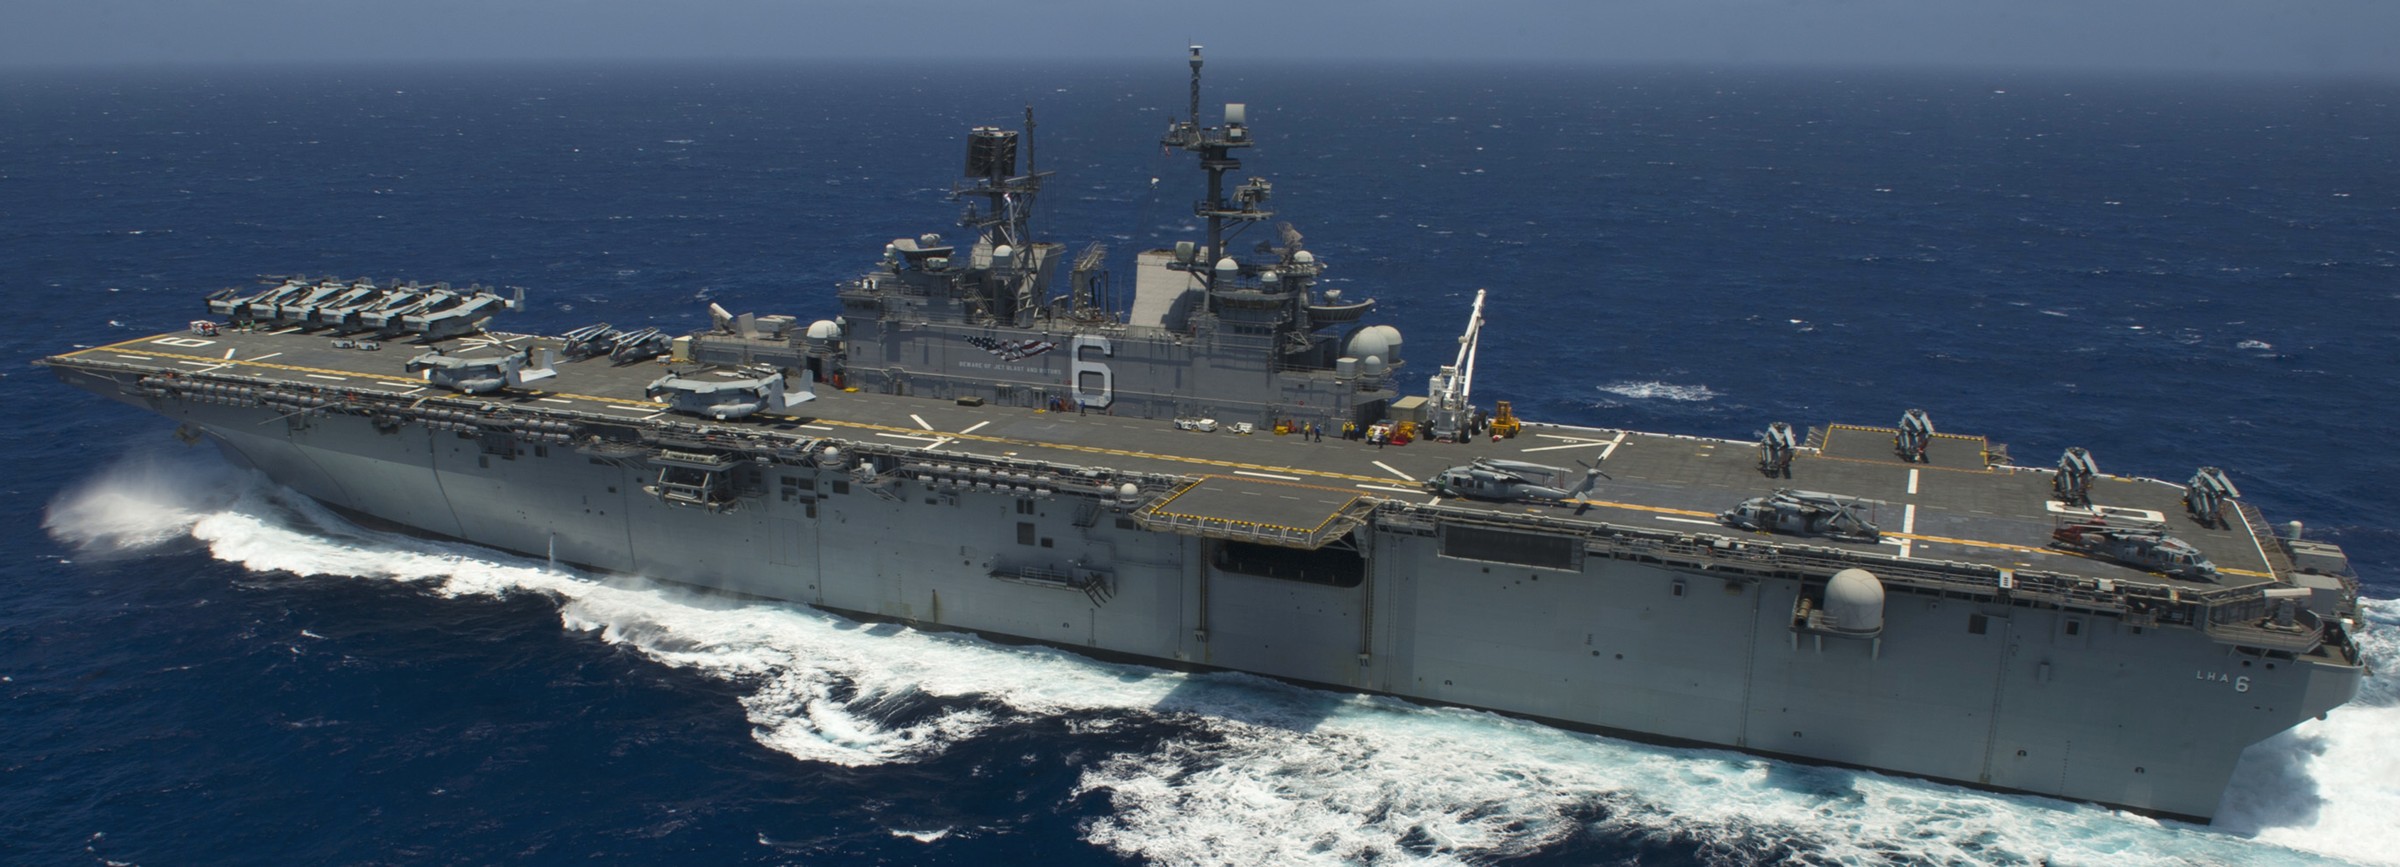 lha-6 uss america amphibious assault ship landing us navy 92